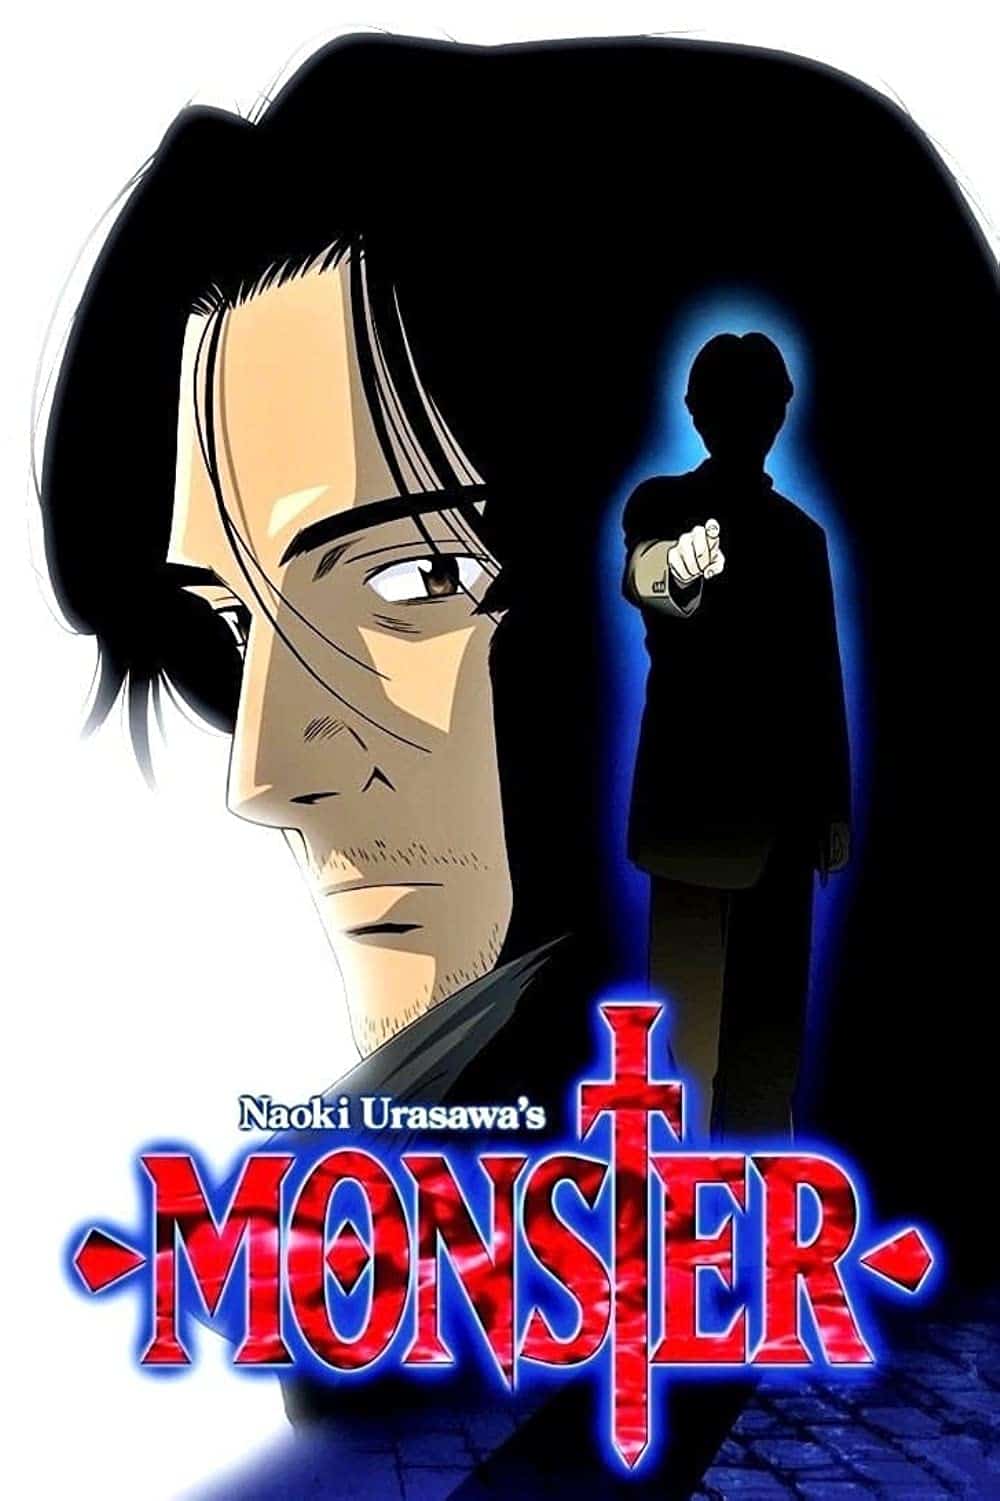 Monster hd poster